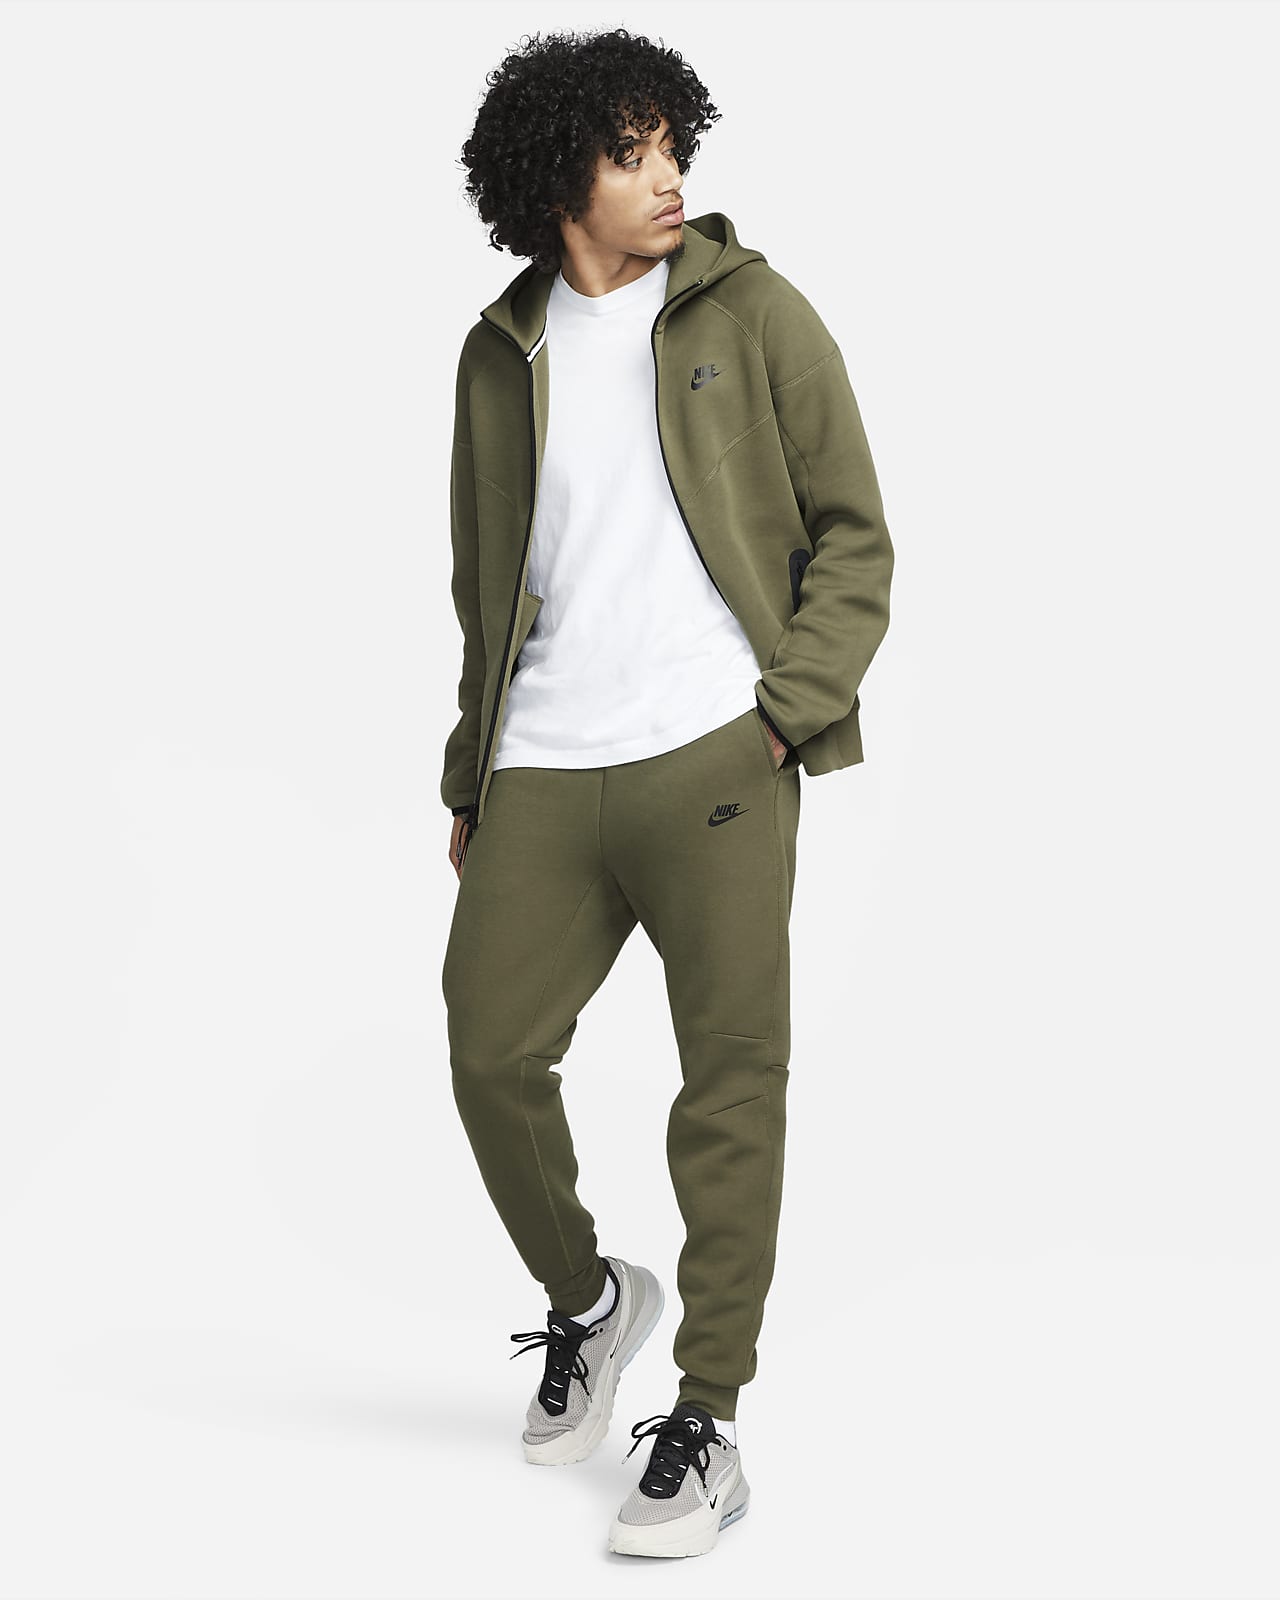 should i get the grey or black tech fleece? i cant decide : r/Nike